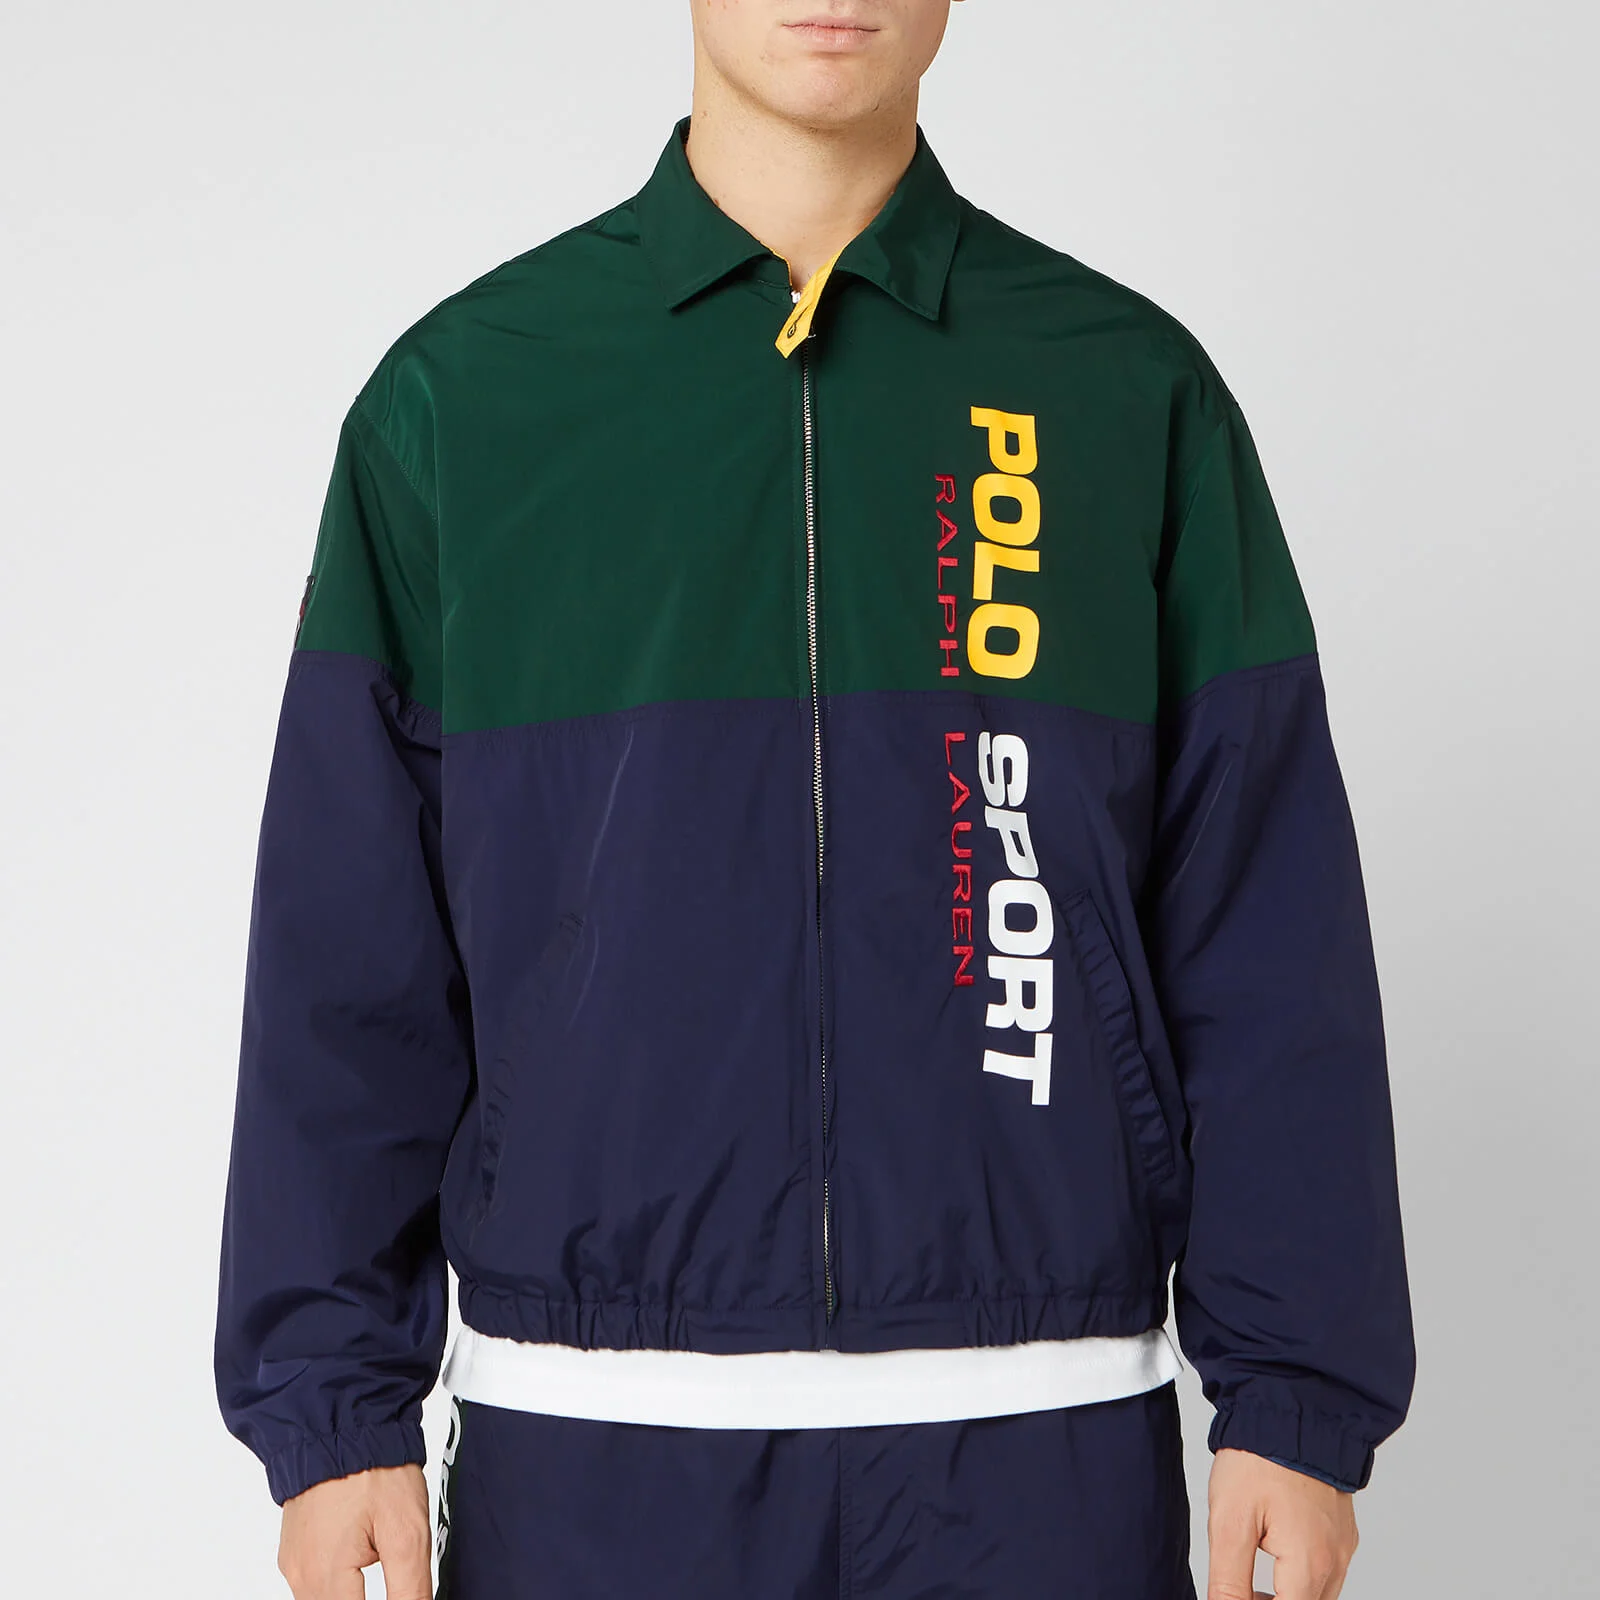 Polo Sport Ralph Lauren Men's Lined Jacket - College Green/Cruise Navy Image 1